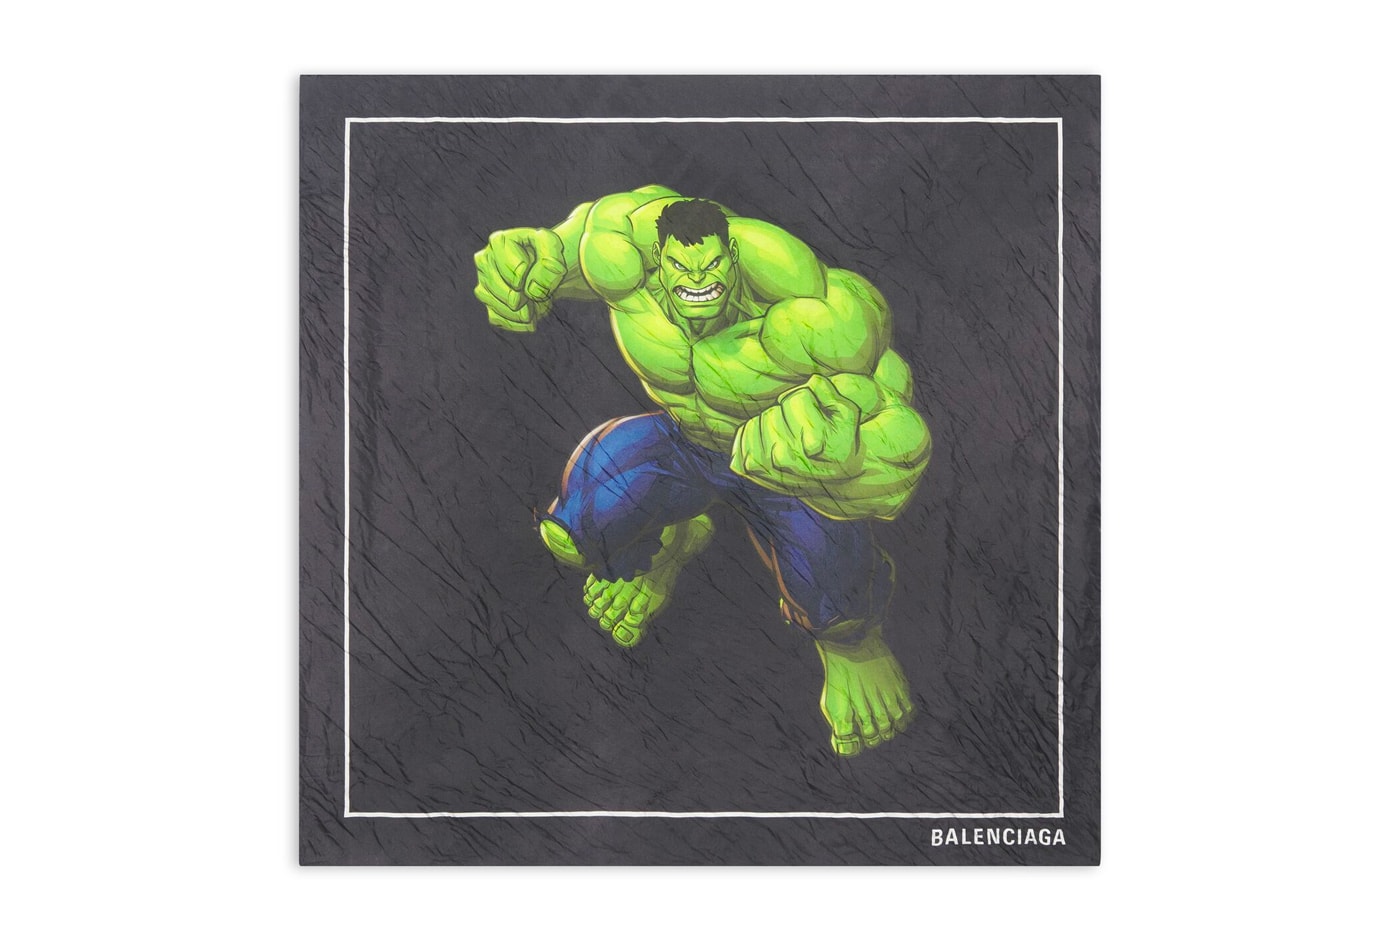 Balenciaga 携手 Marvel 推出「绿巨人 Hulk」全新胶囊系列